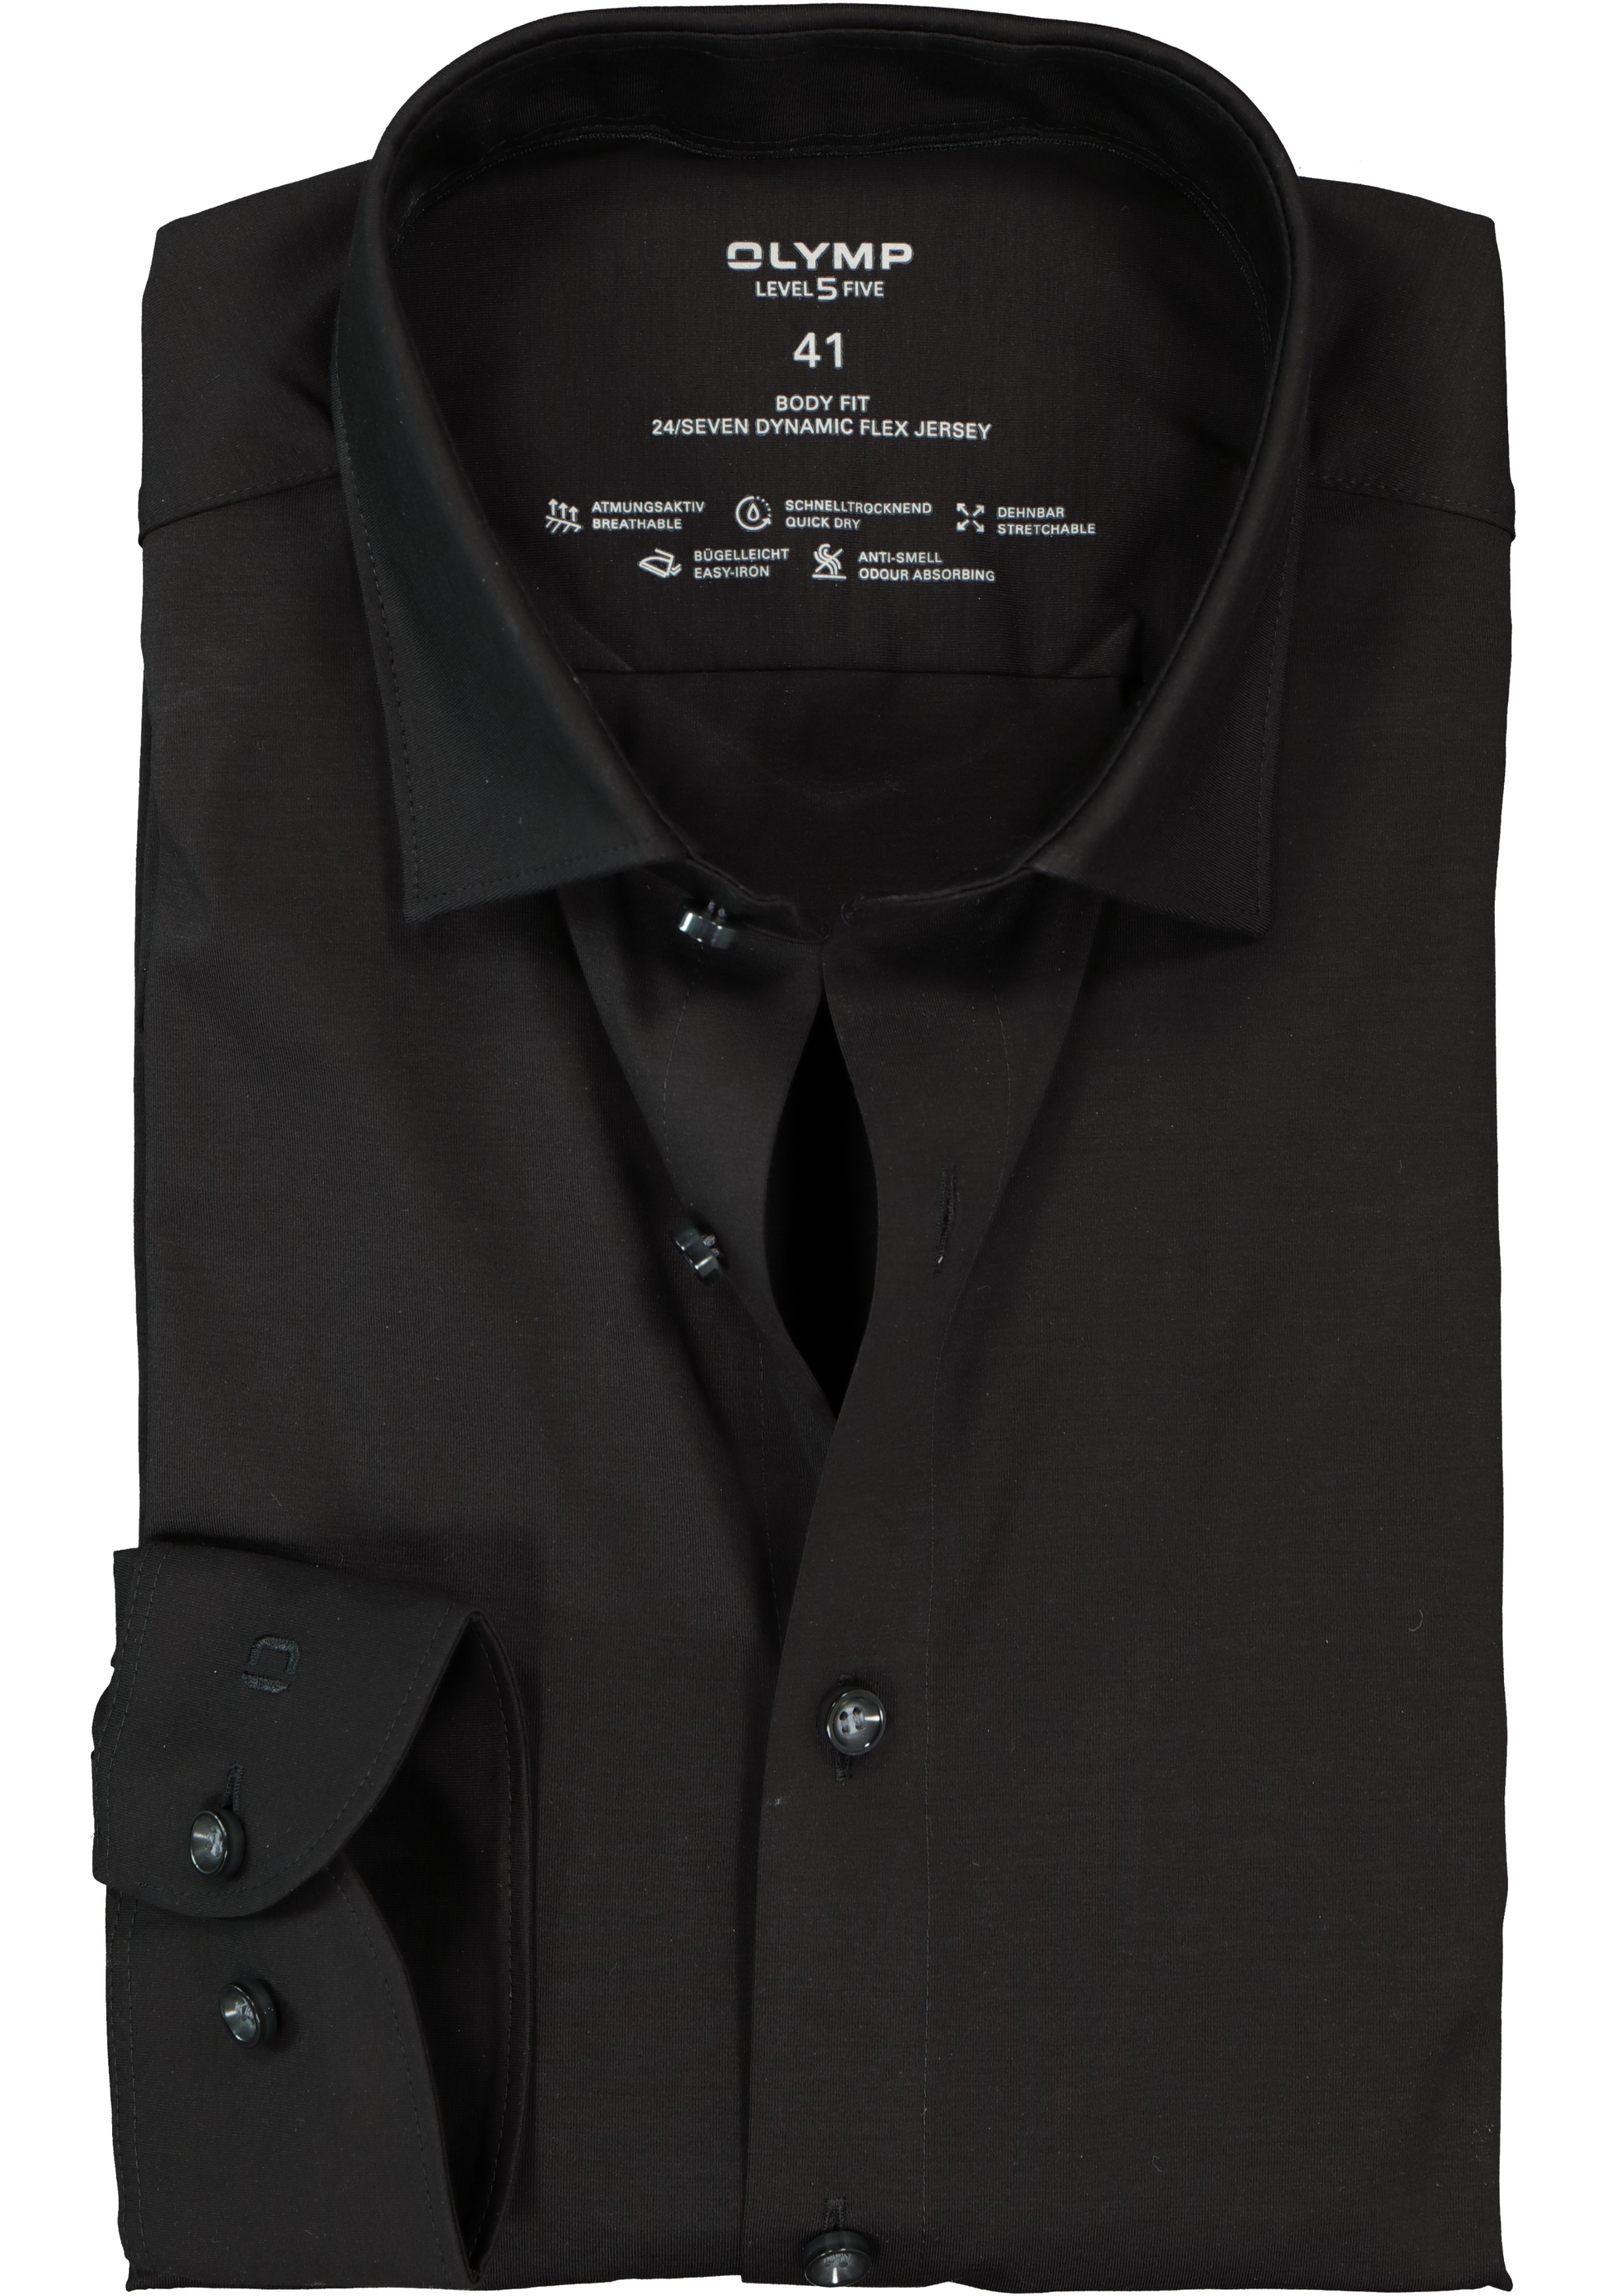 OLYMP Level 5 body fit overhemd 24/7, mouwlengte 7, zwart tricot